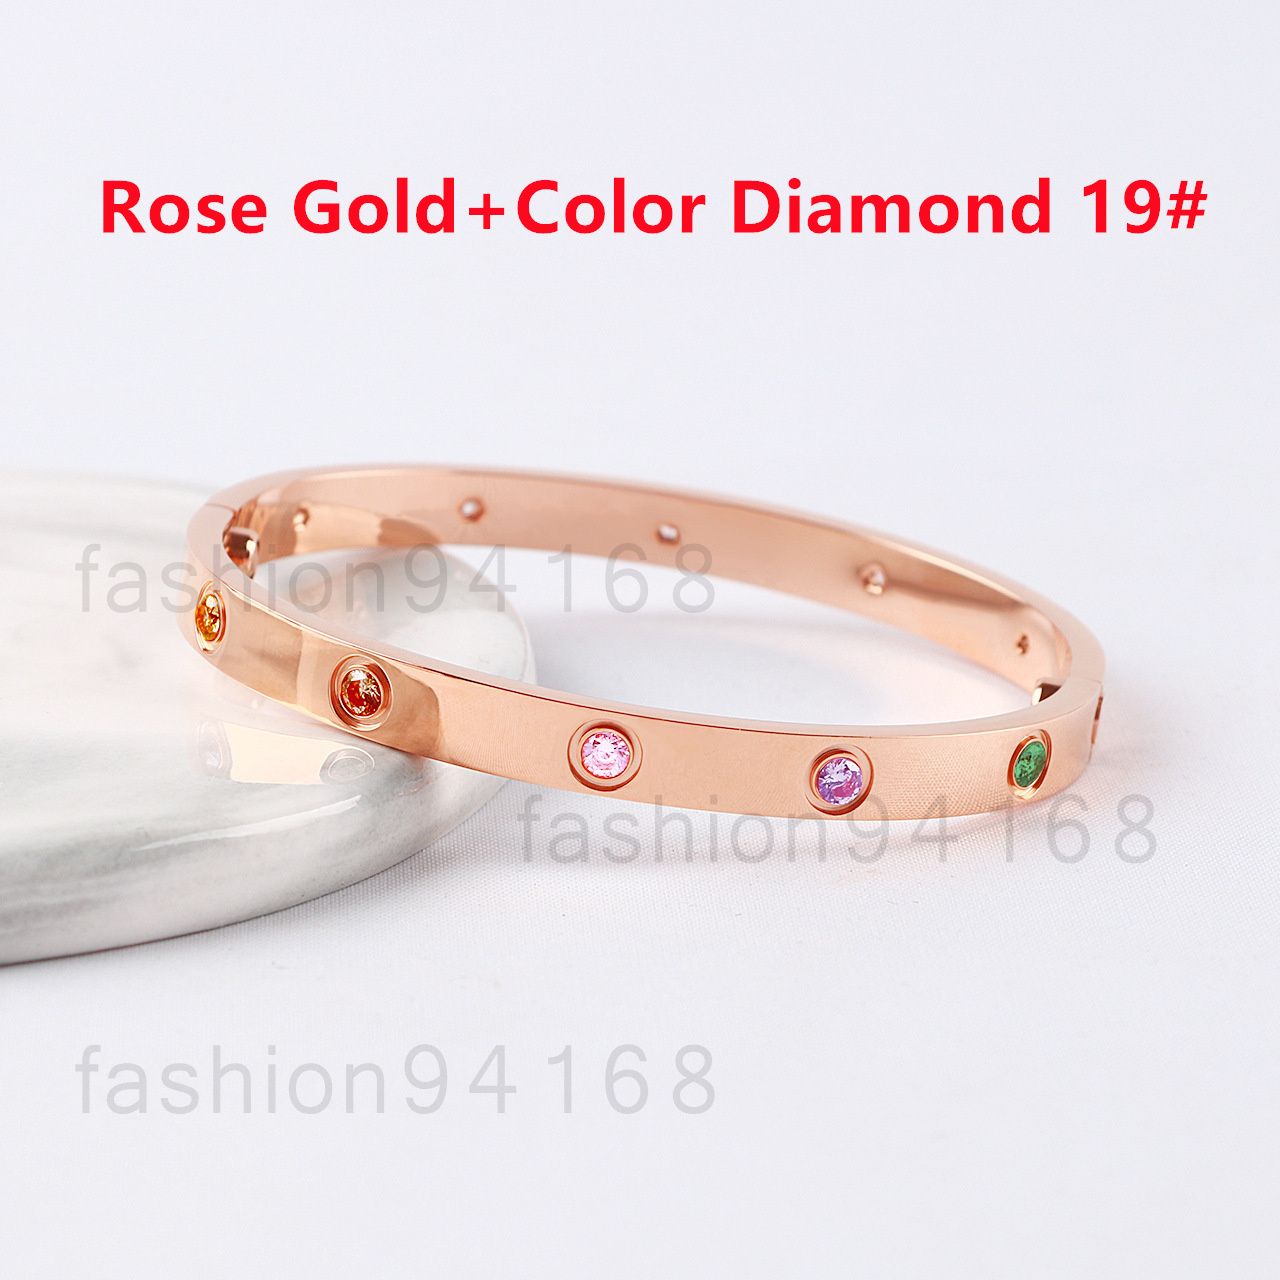 Rose Gold 19+Color Diamond